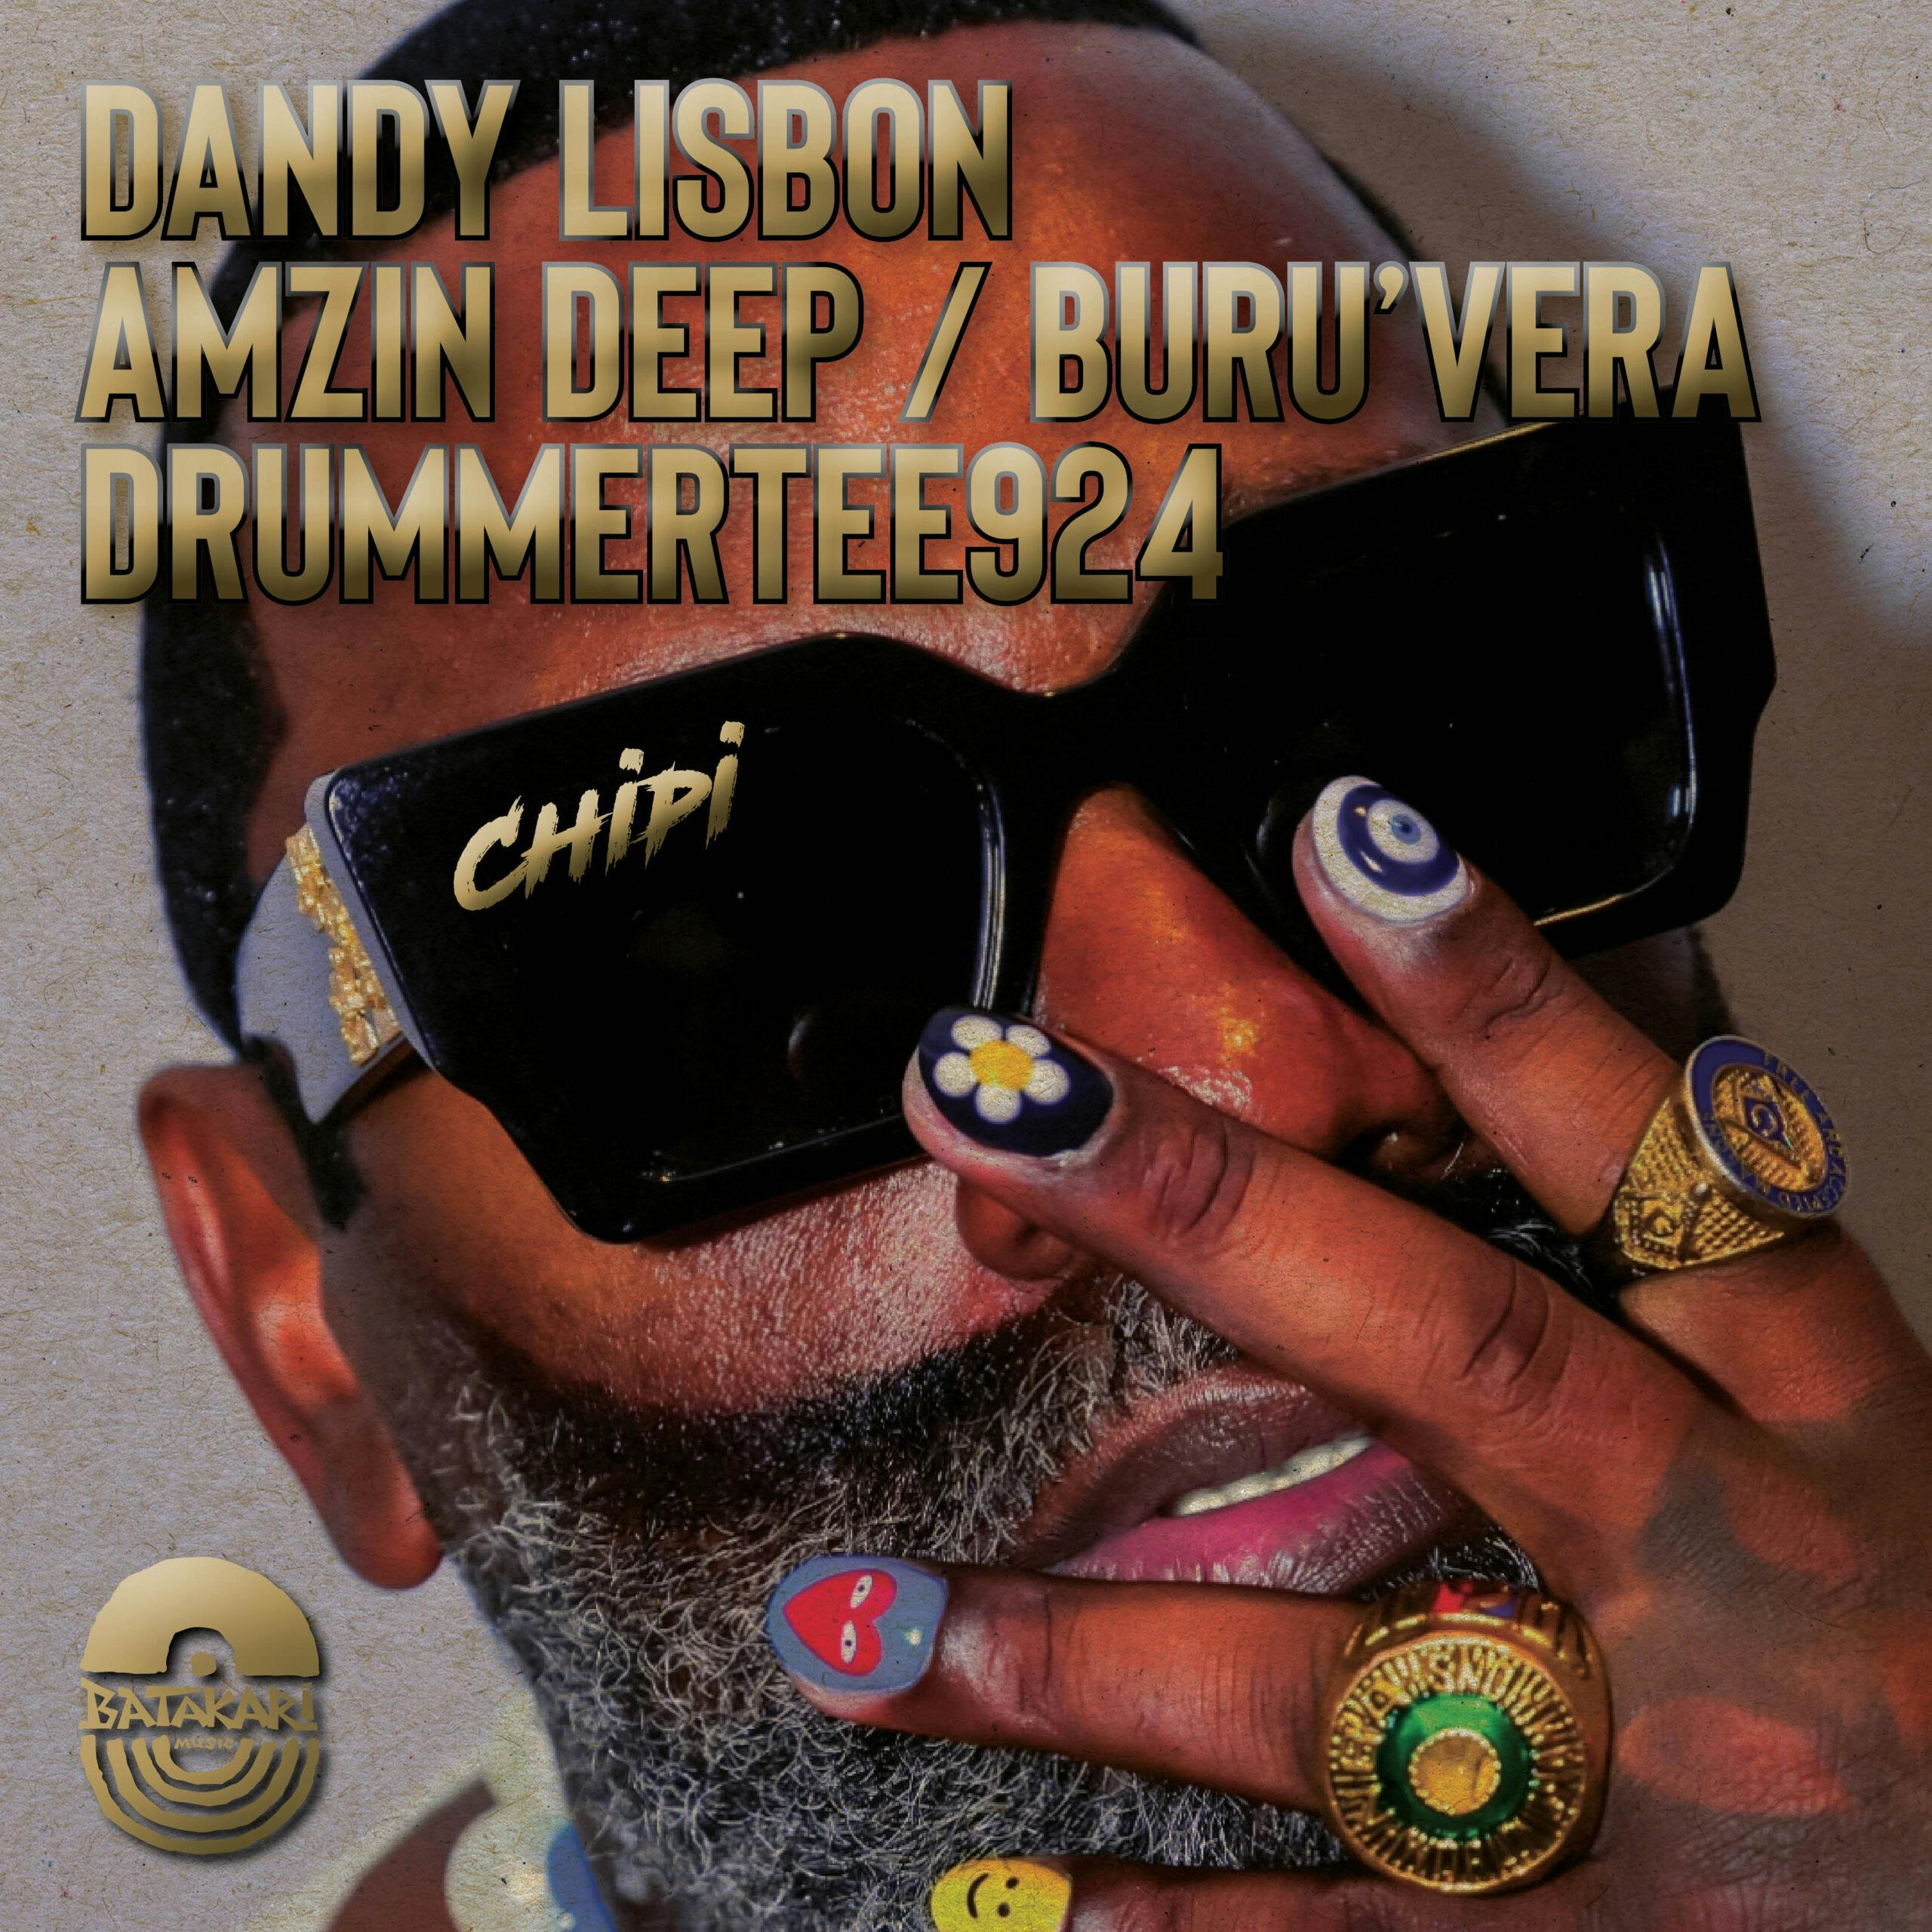 DandyLisbon - Chipi